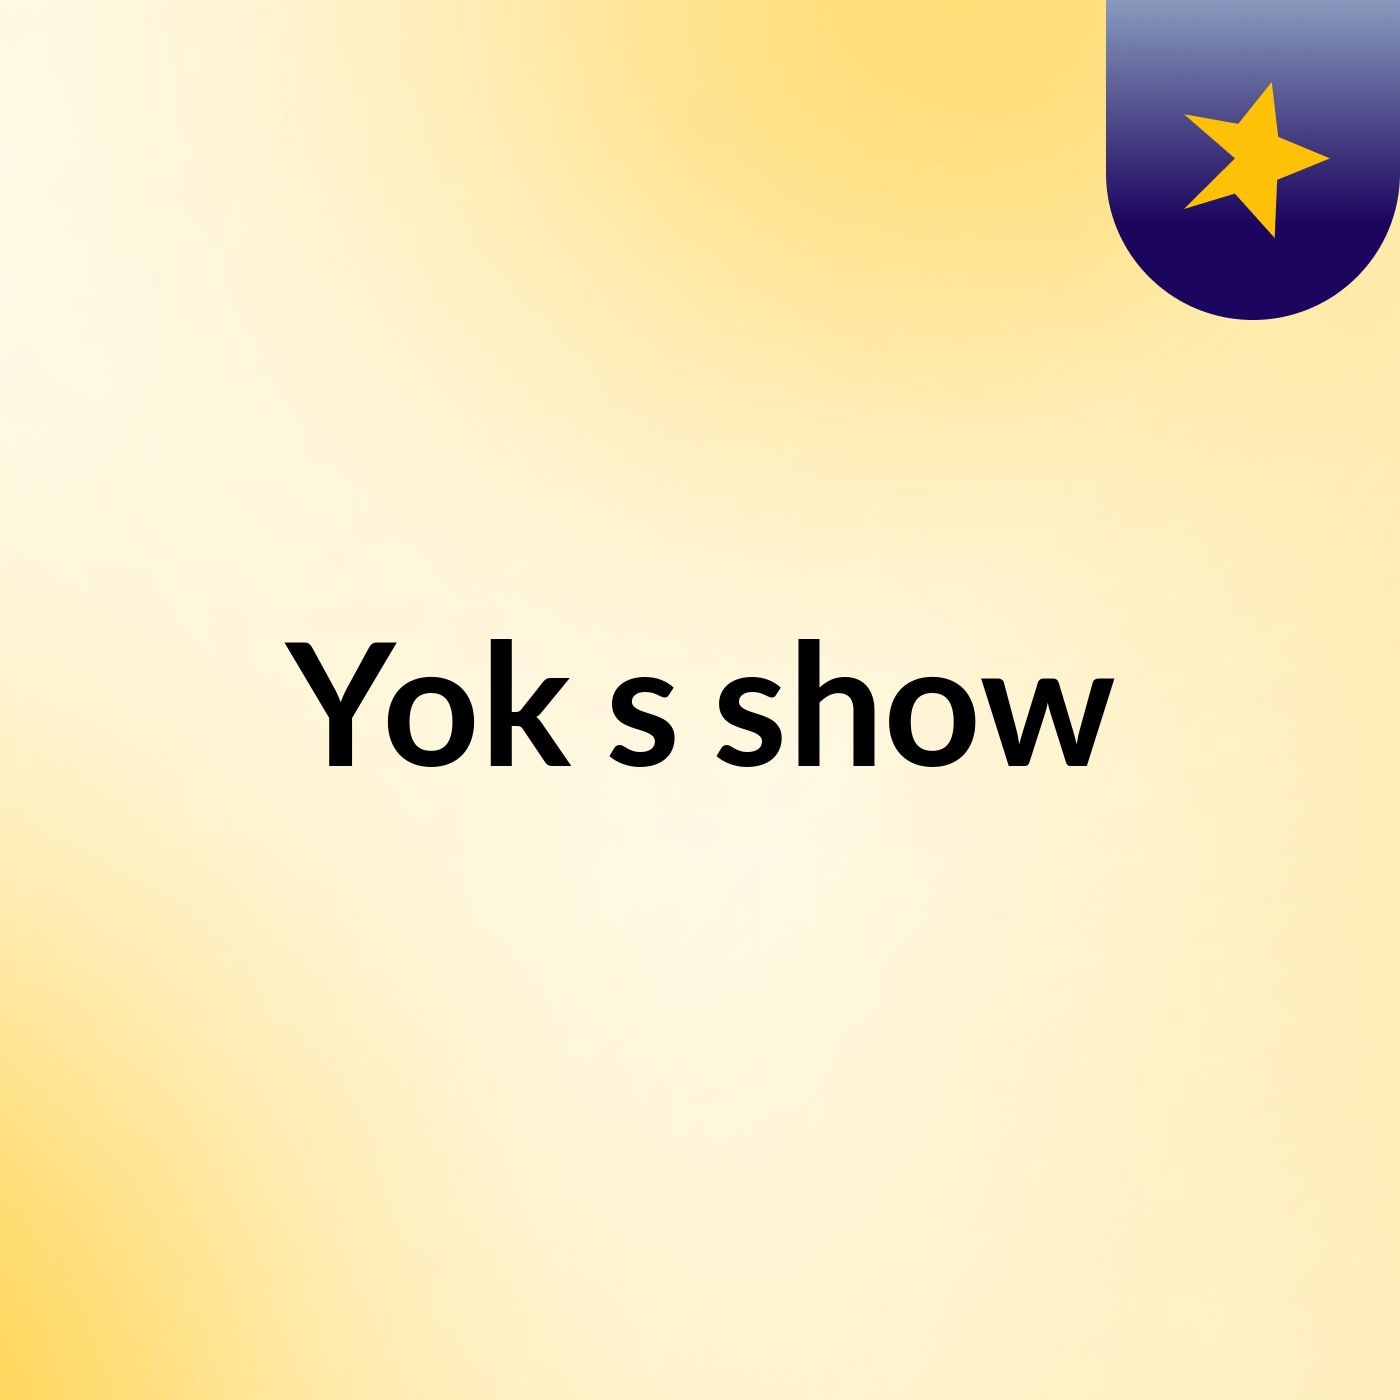 Yok's show